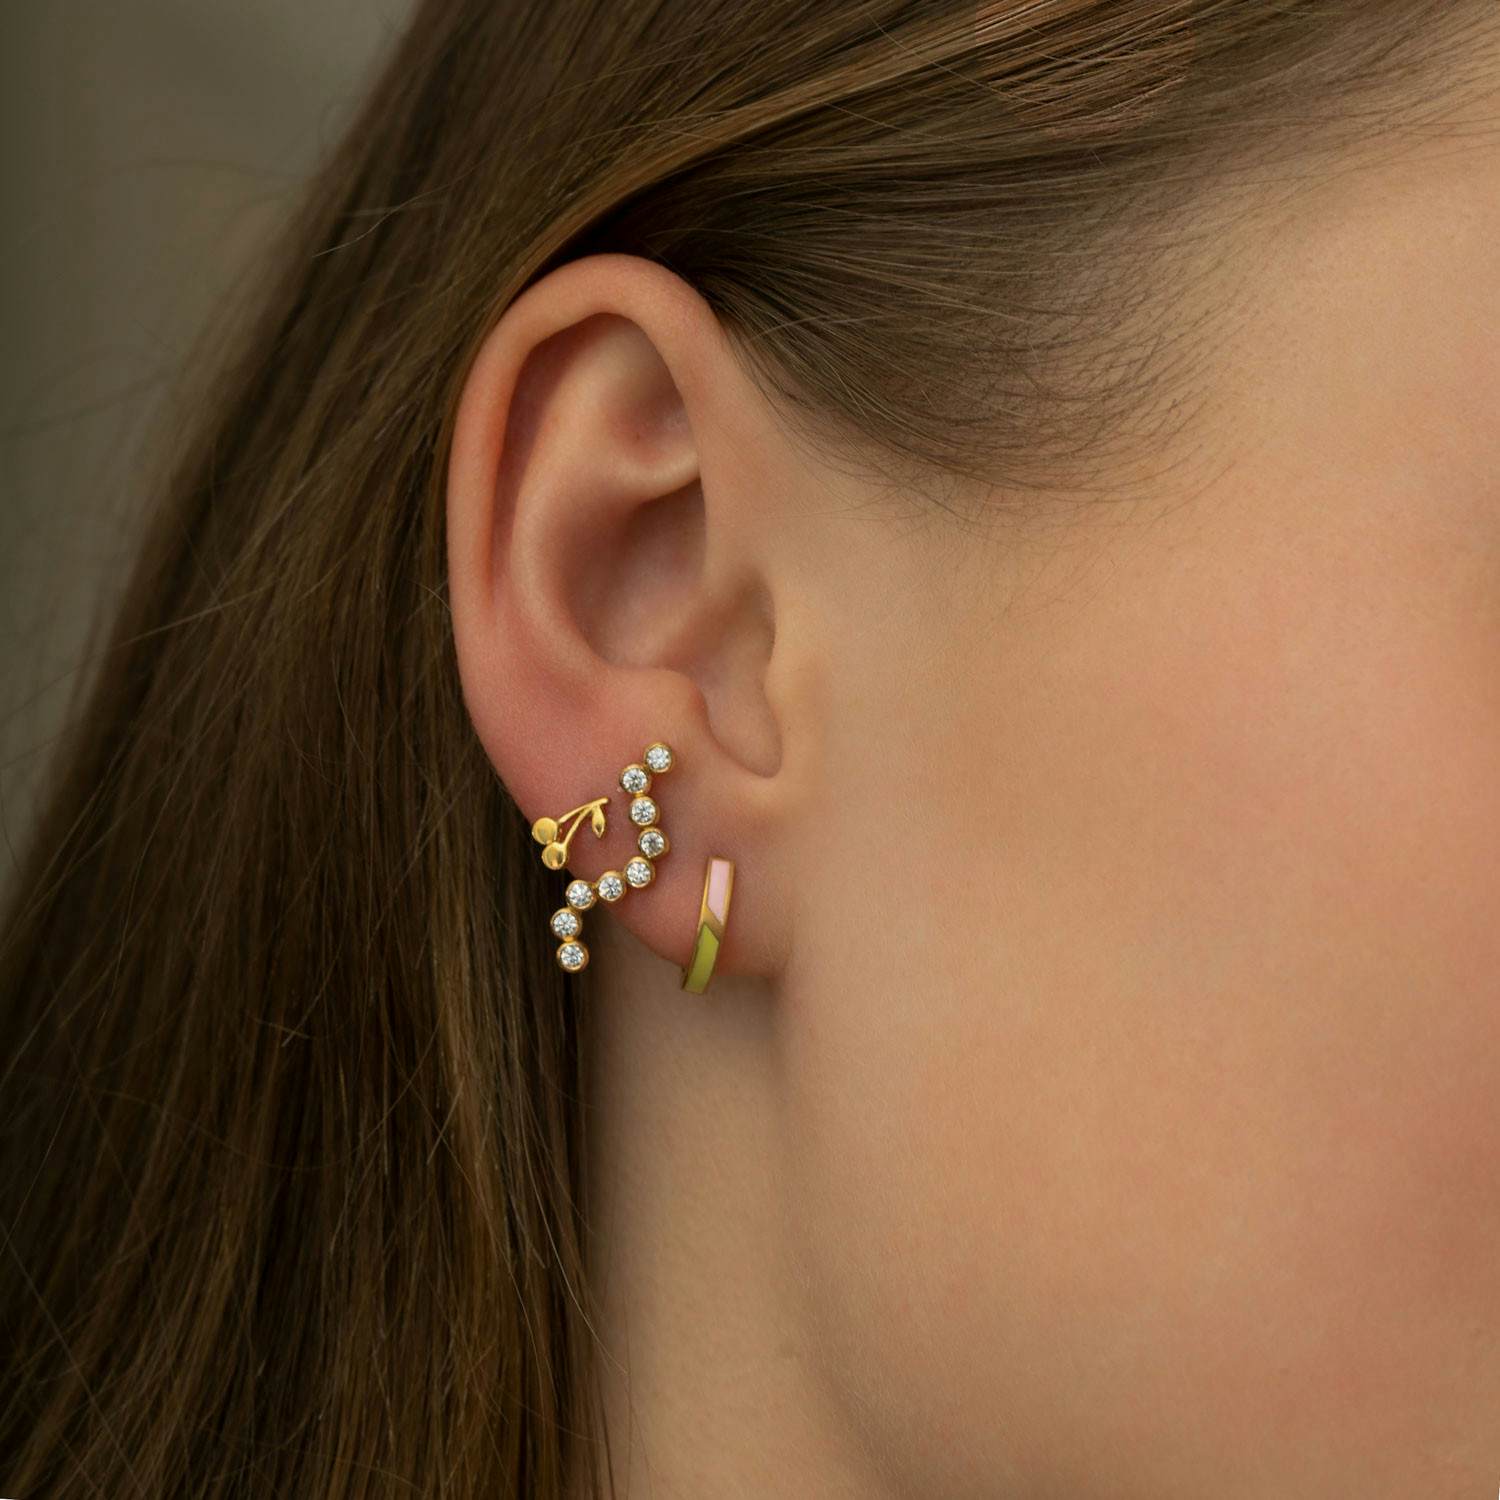 Petit Cherry Earring von STINE A Jewelry in Vergoldet-Silber Sterling 925